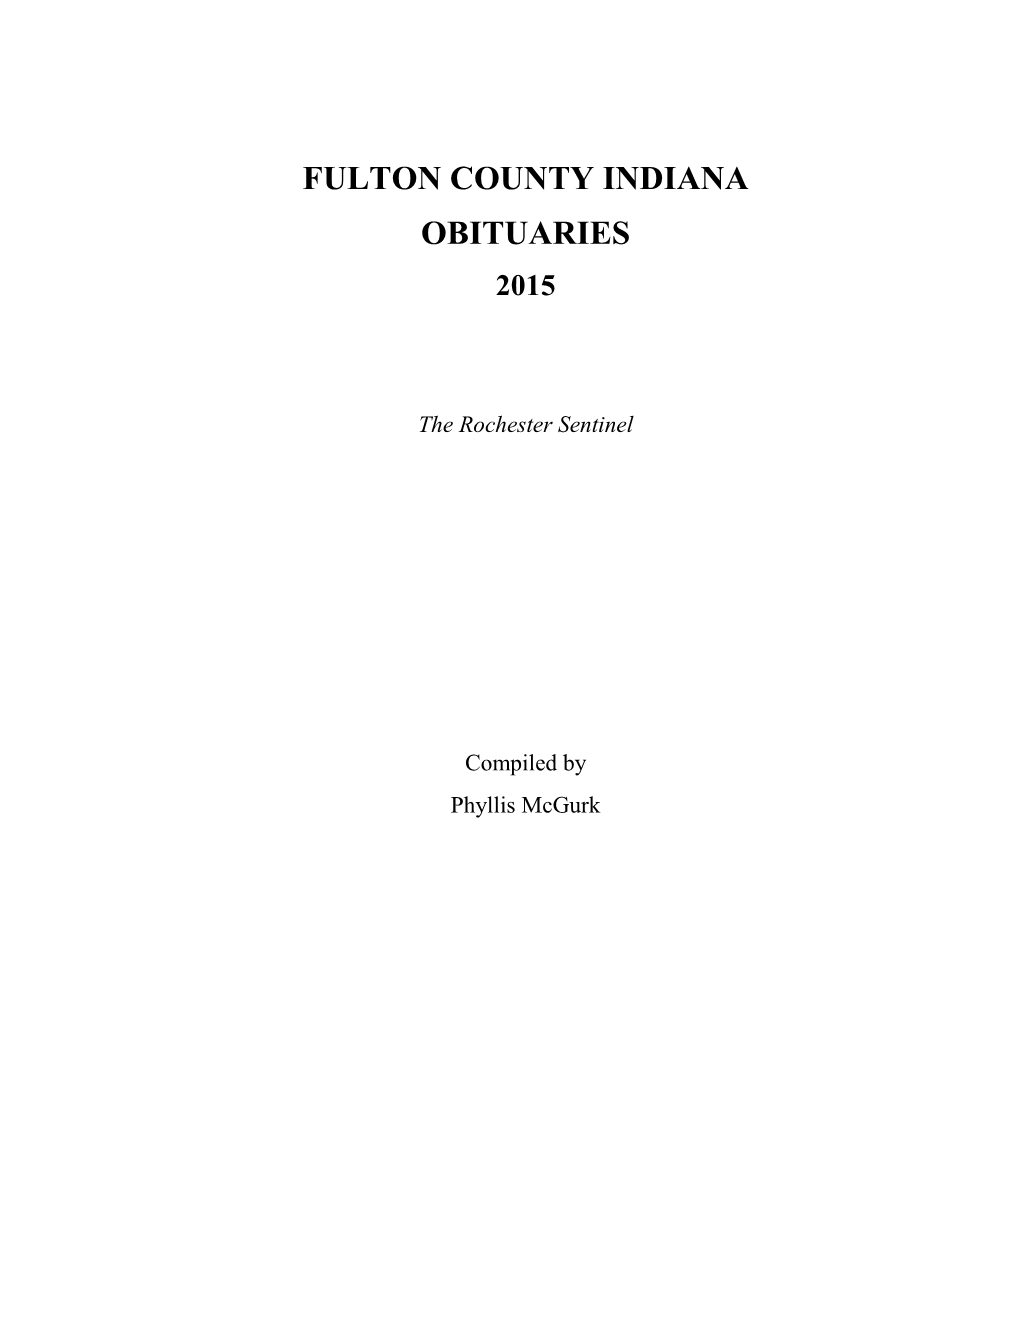 Fulton County Indiana Obituaries 2015